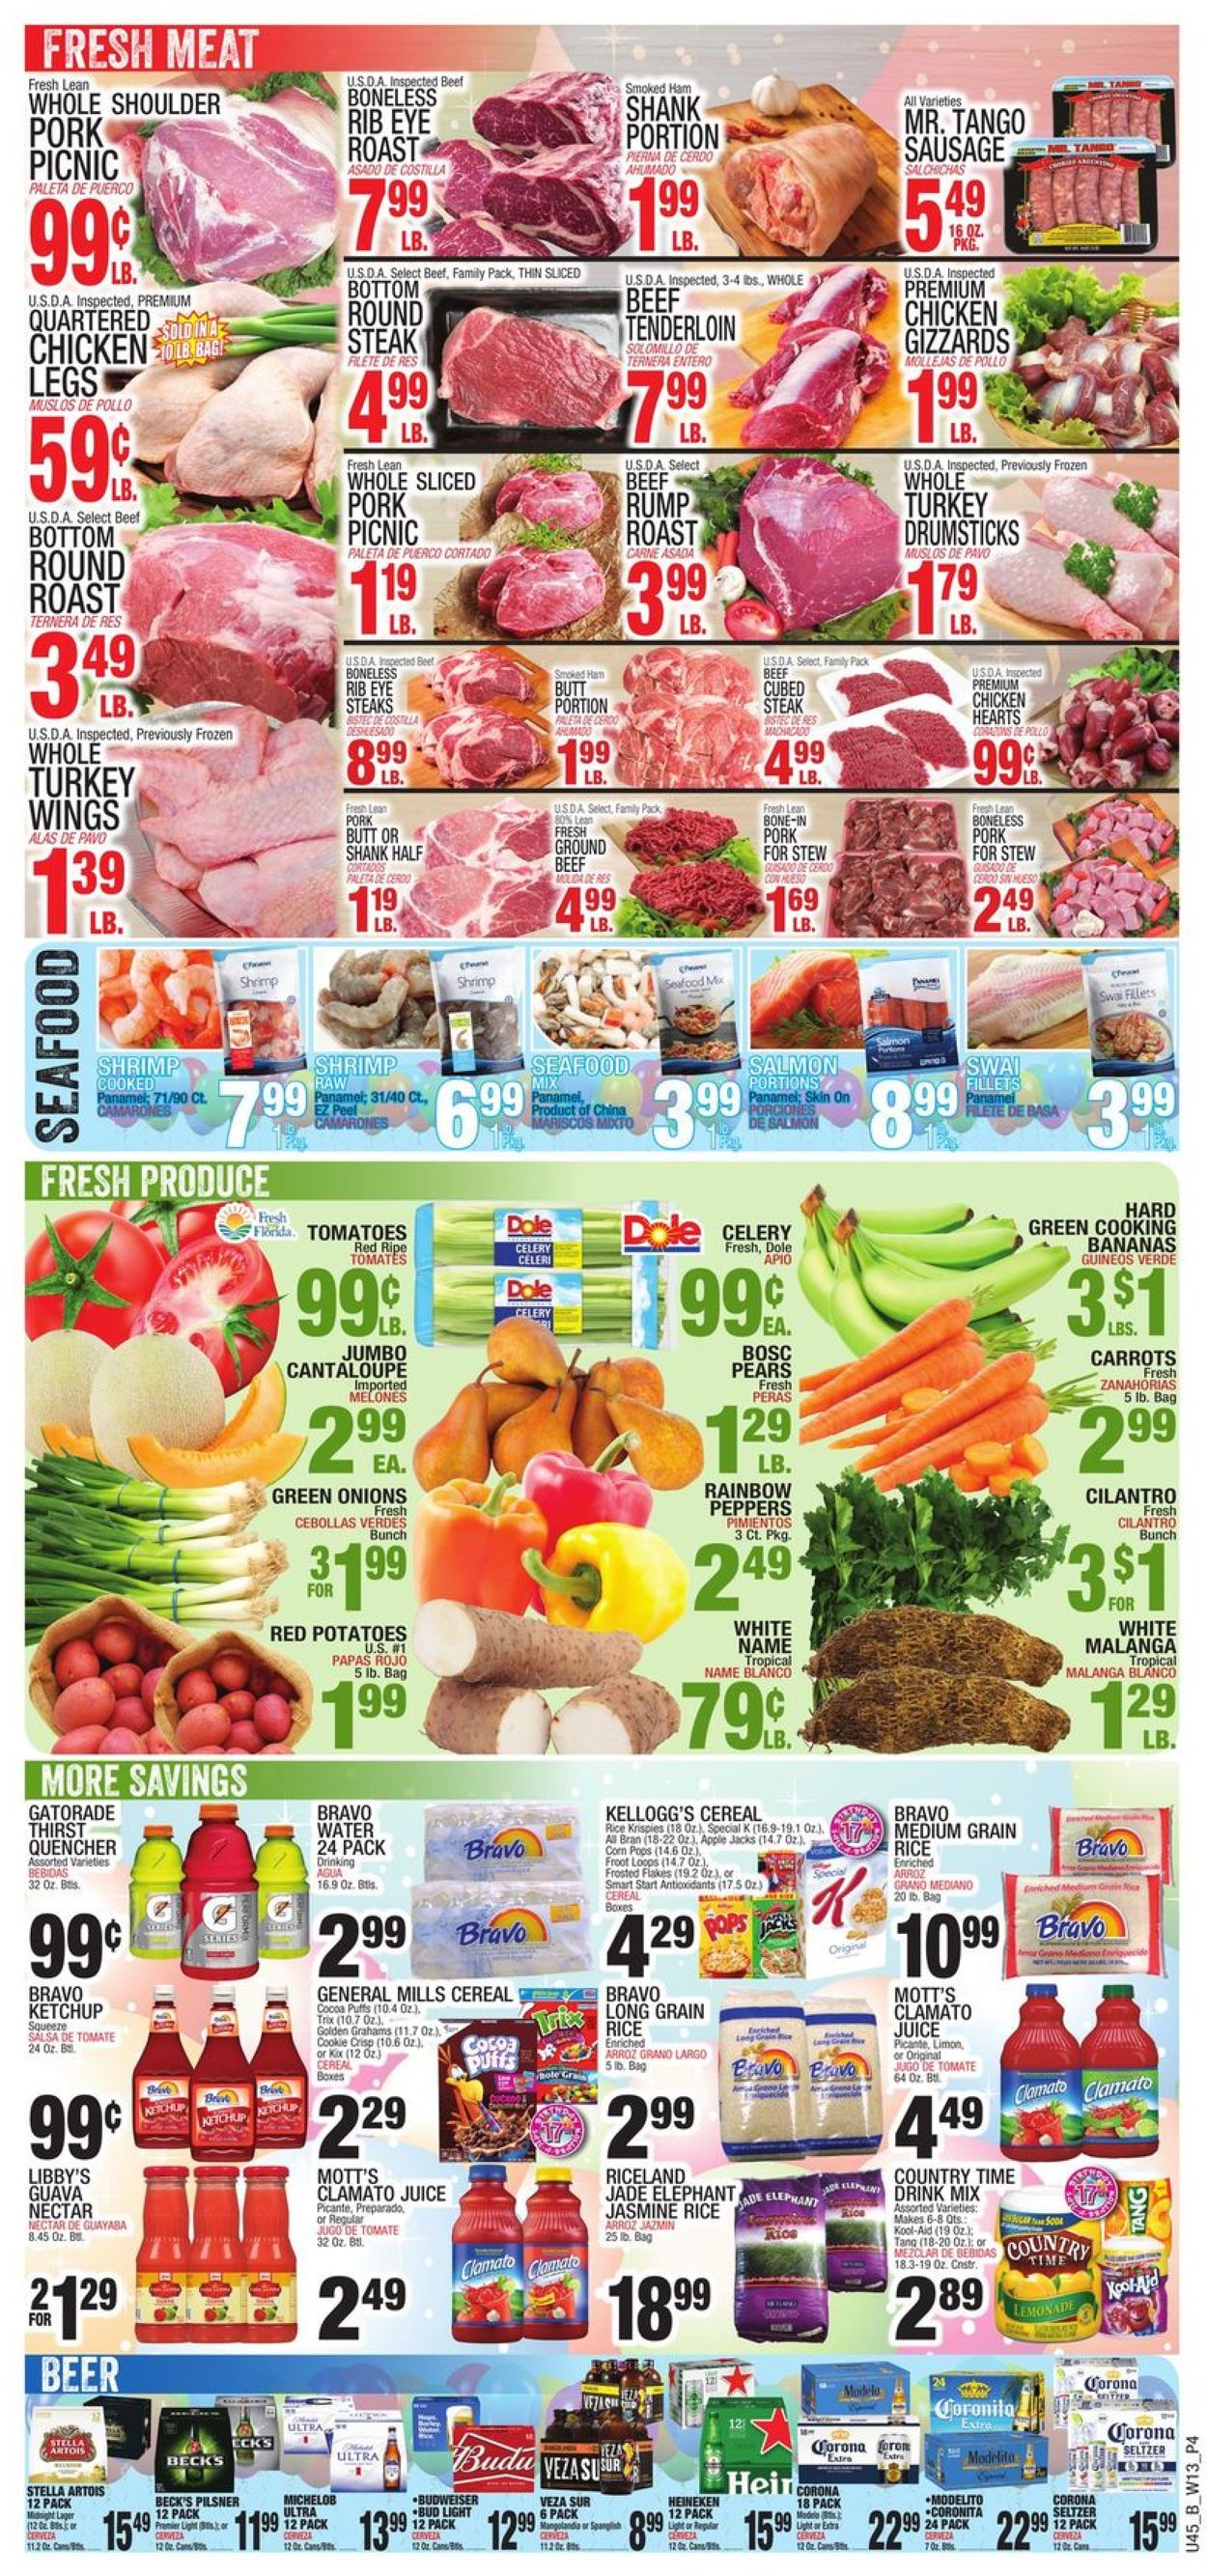 Catalogue Bravo Supermarkets from 03/25/2021